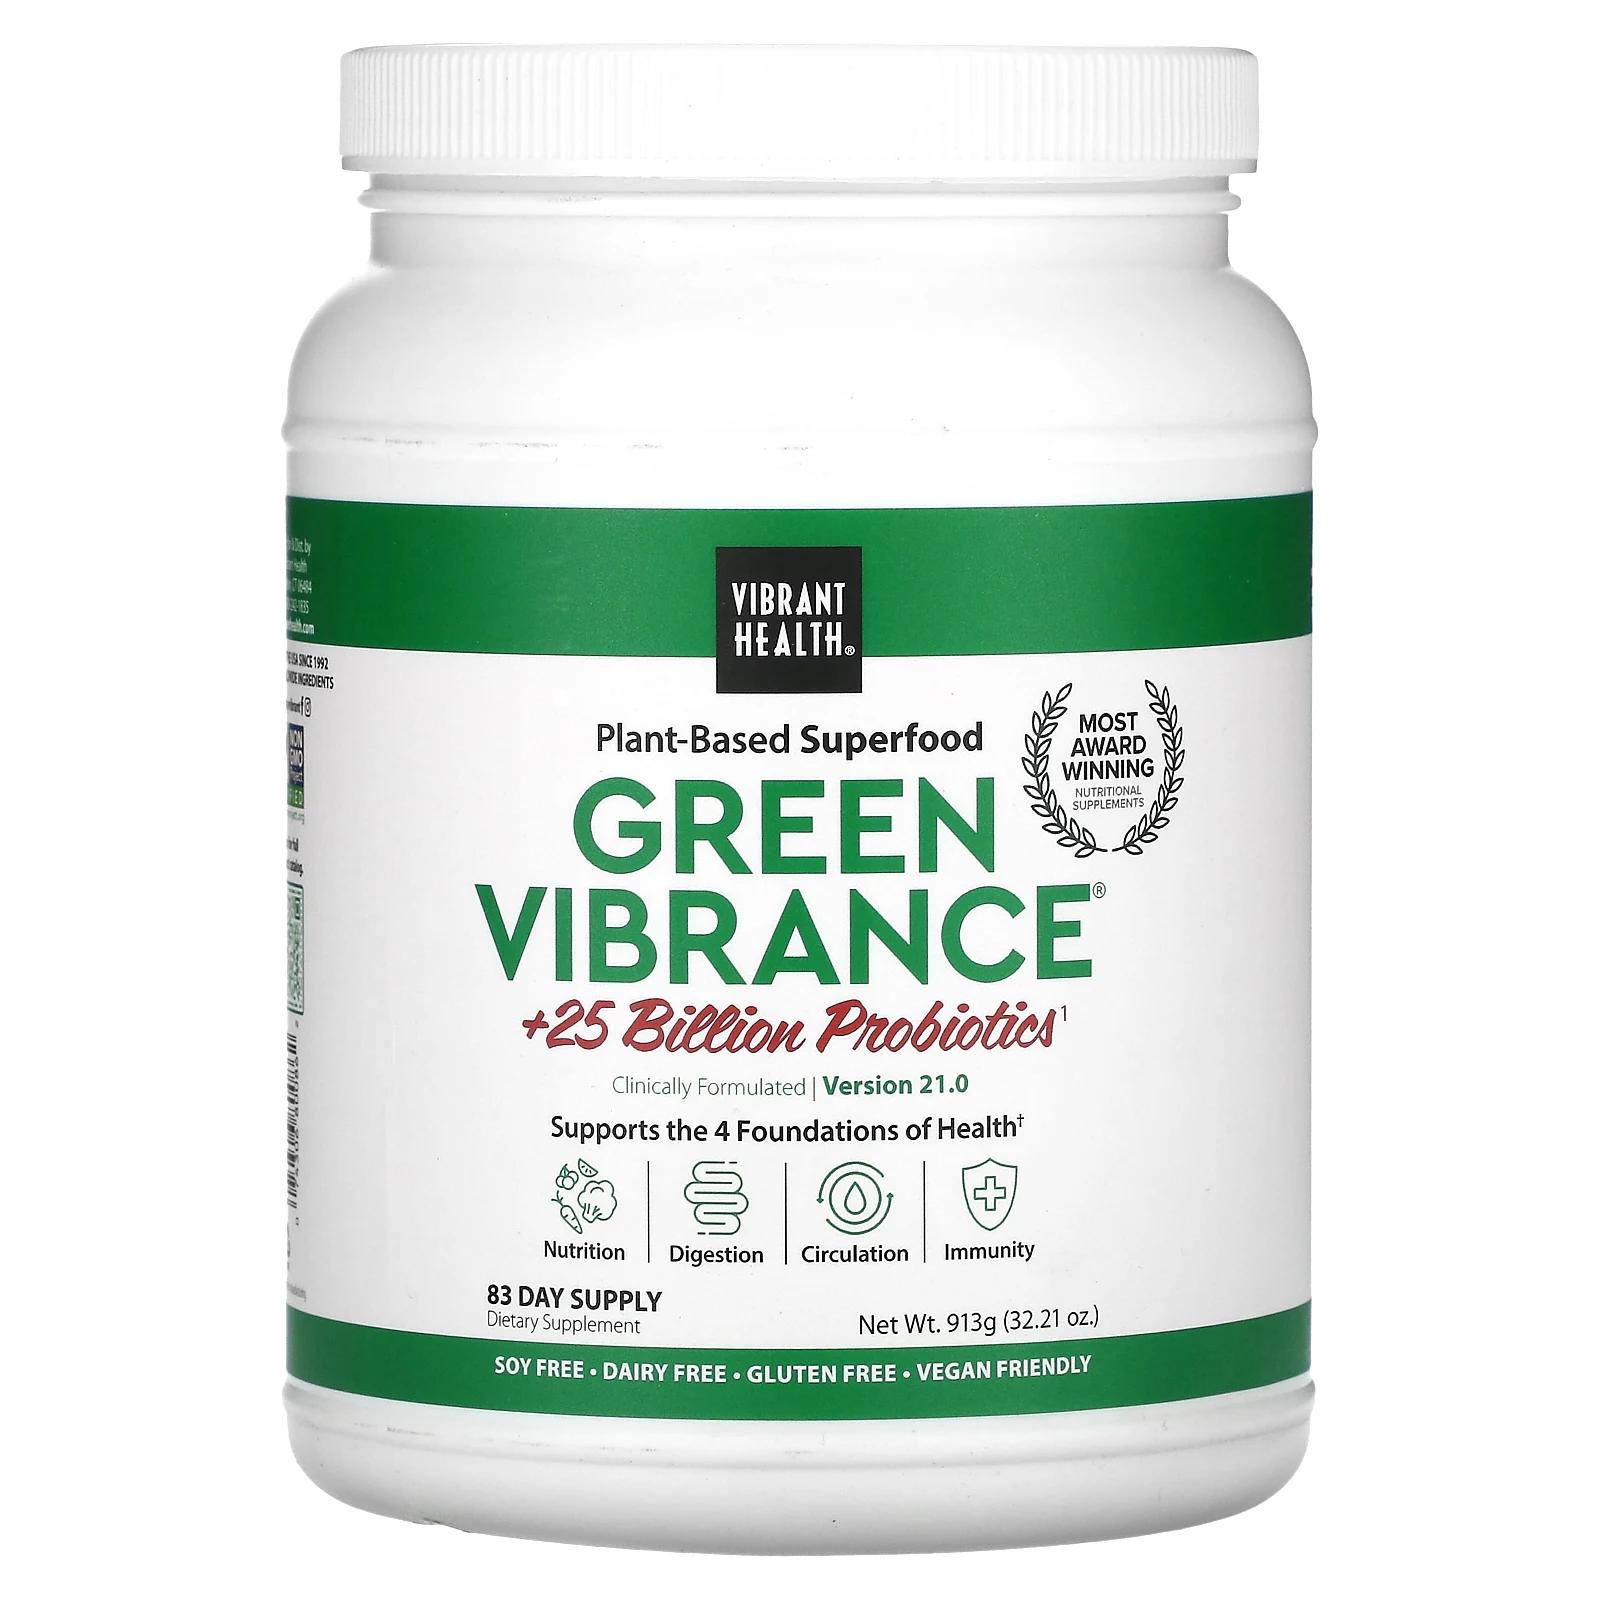 Vibrant Health Green Vibrance +25 млрд пробиотиков версия 17.0 35,27 унц. (1 кг) vibrant health green vibrance 25 млрд пробиотиков версия 17 0 35 27 унц 1 кг